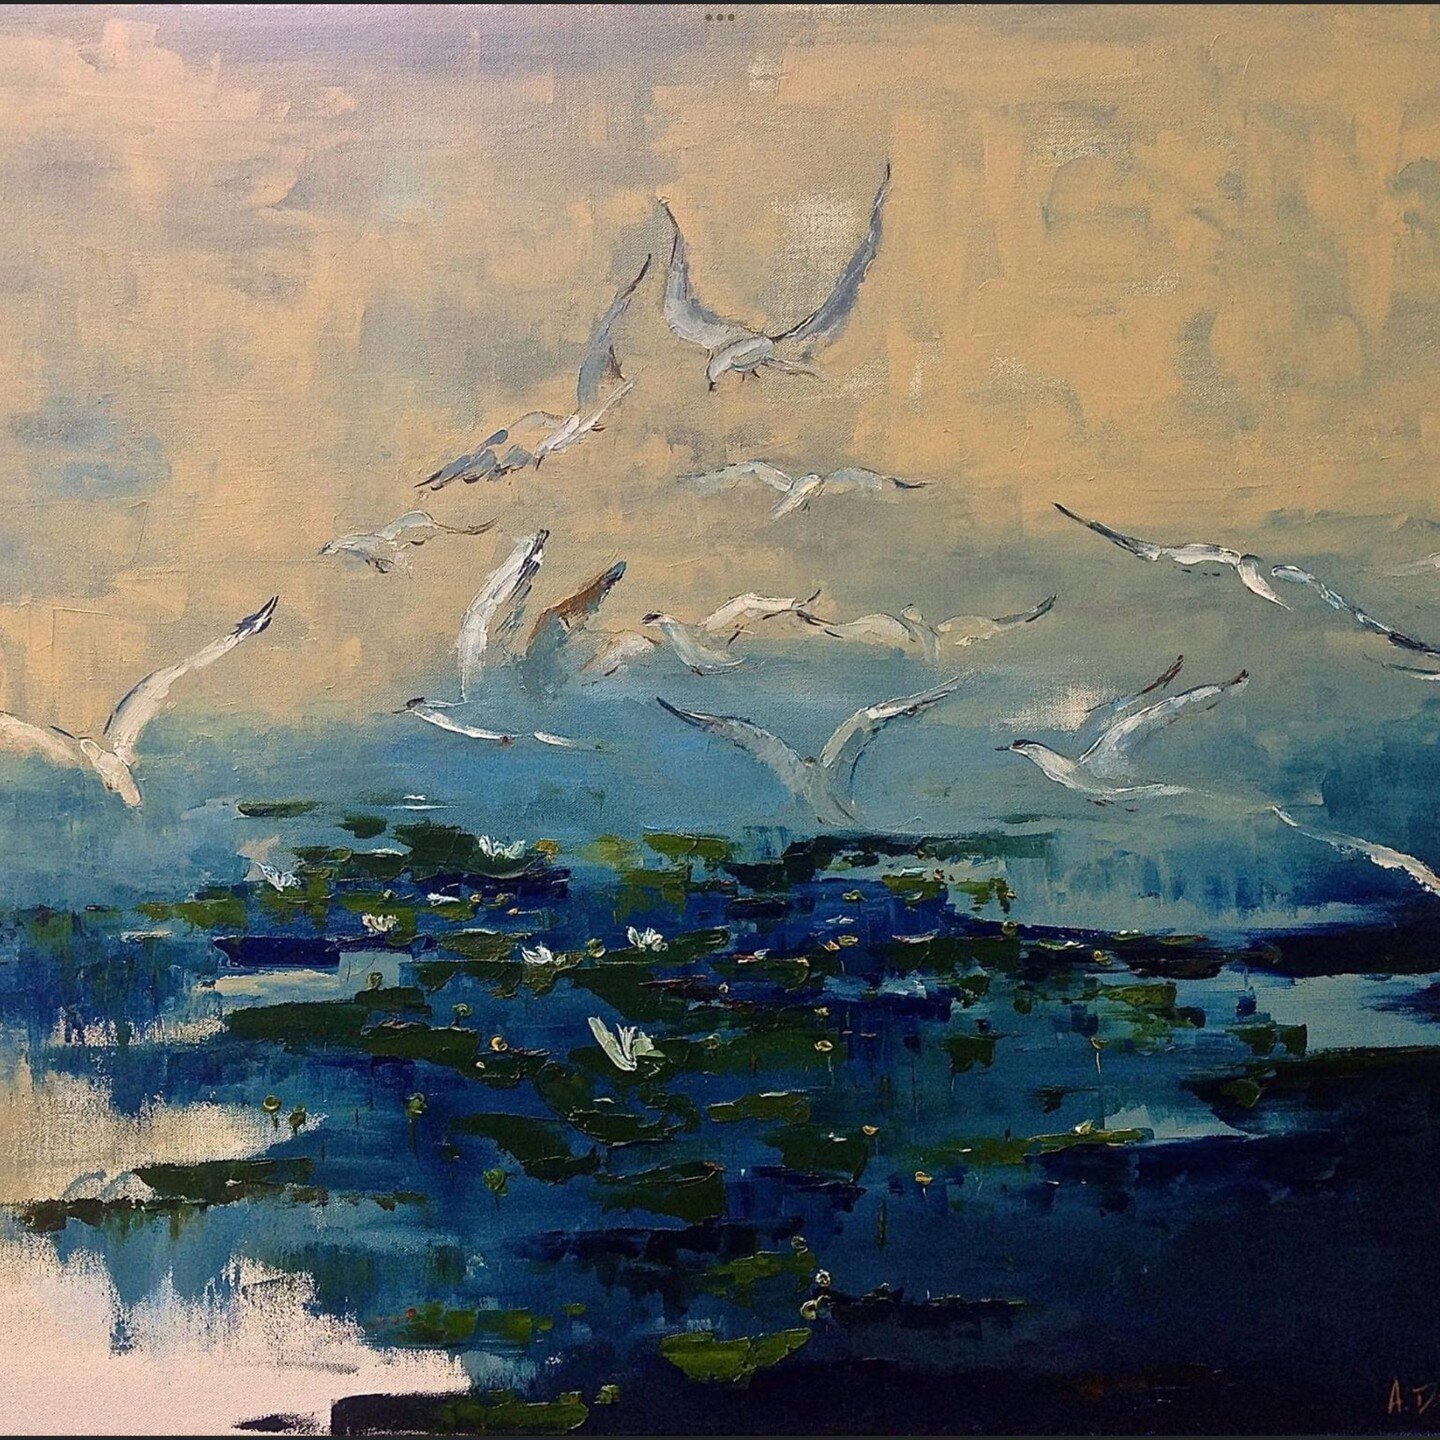 Vogels over de Danube
30x40 (oil on canvas)